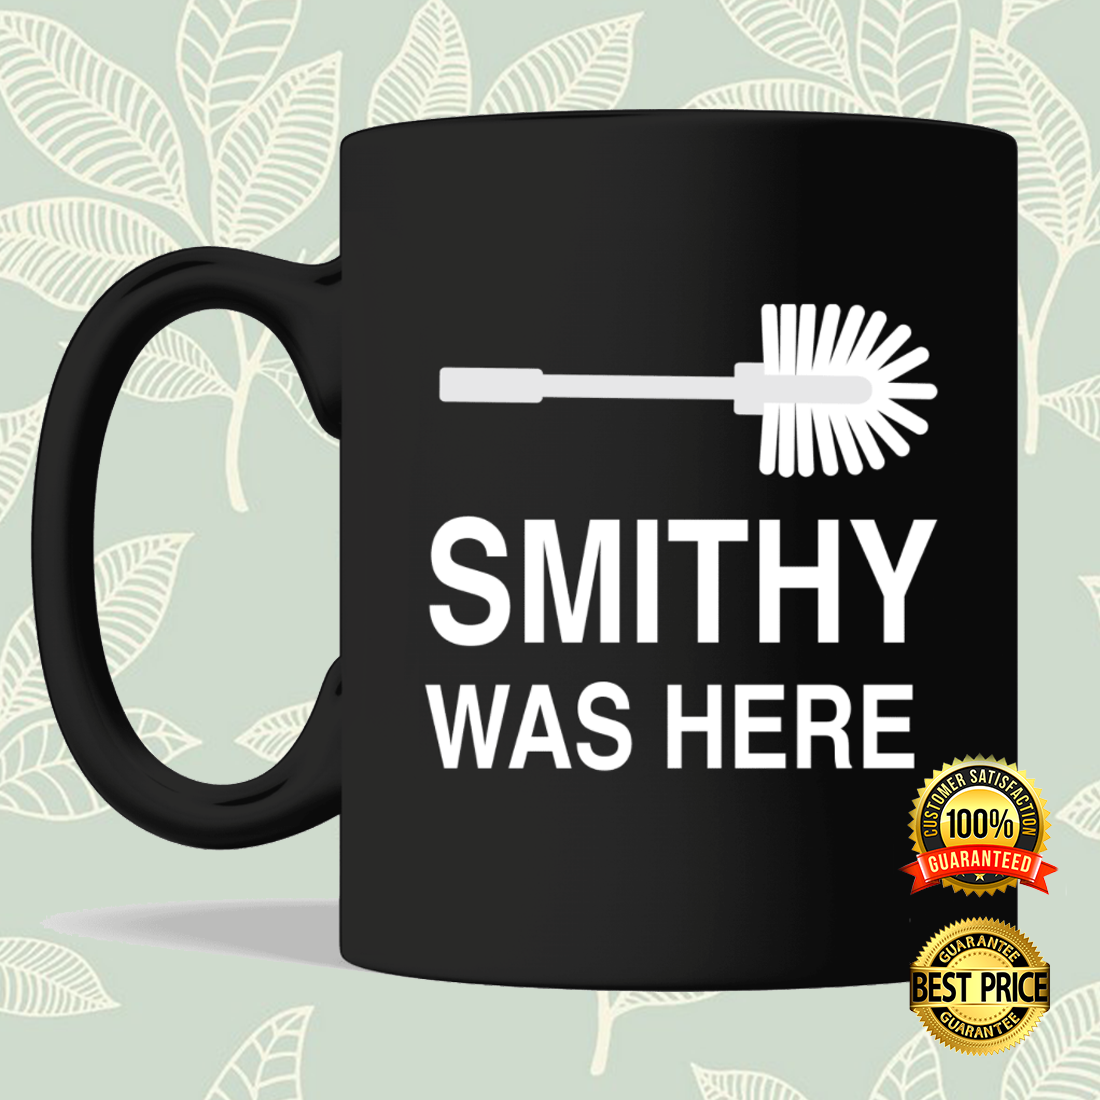 Smithy was here mug 2